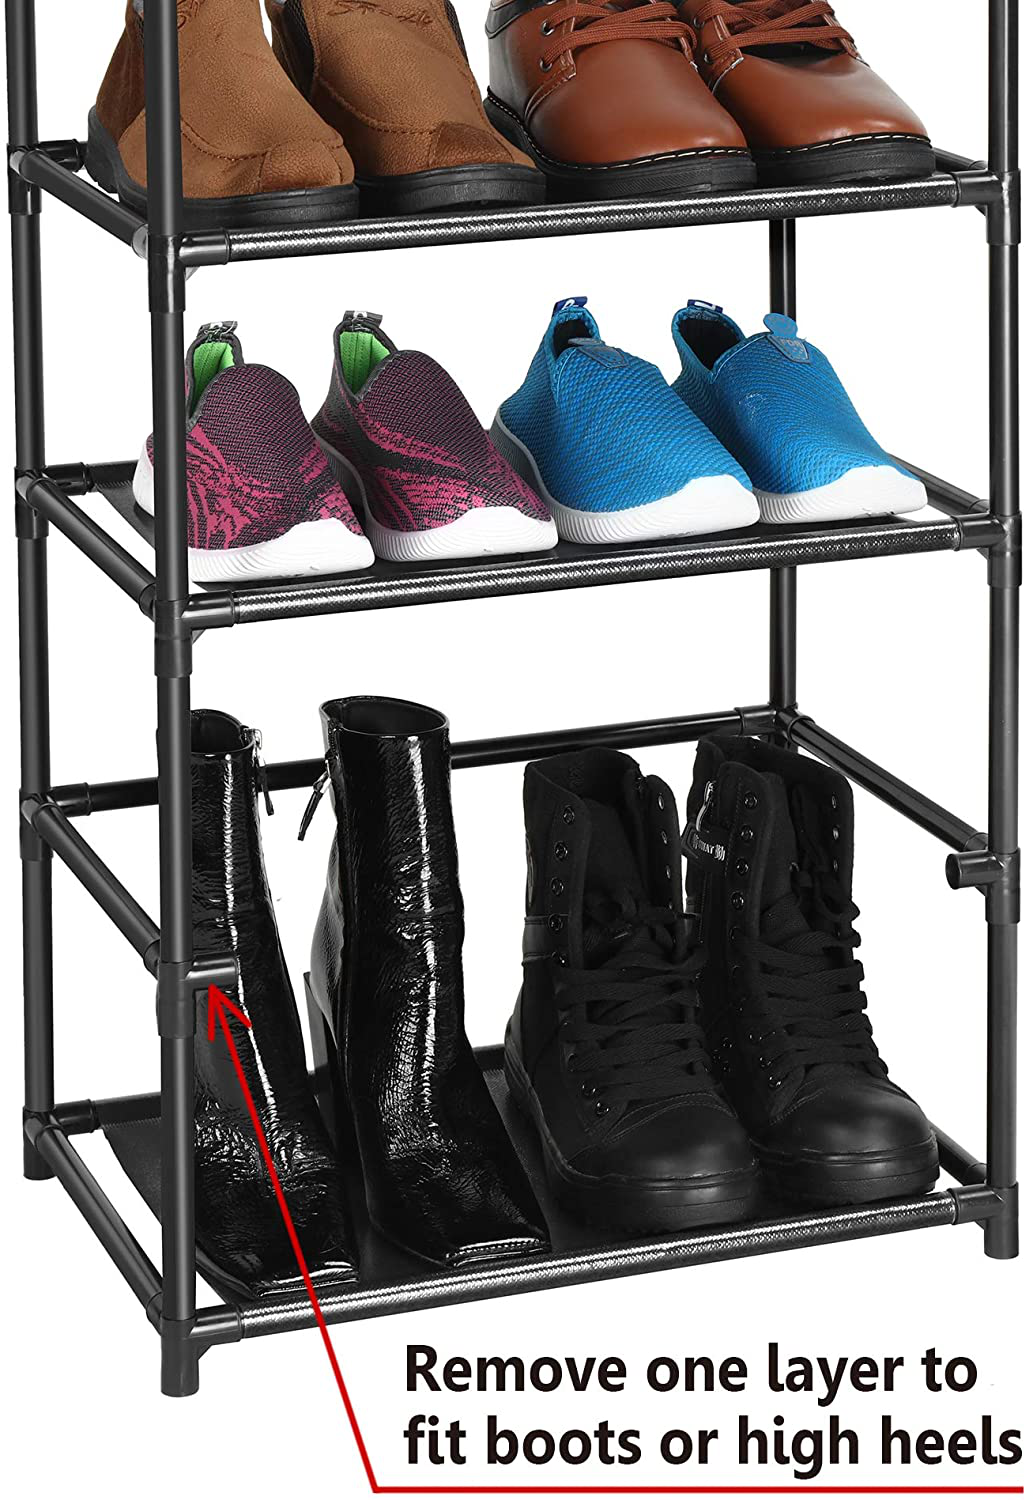 fiducial home 8 Tiers Shoe Rack 16-20 Pairs Sturdy Shoe Shelf